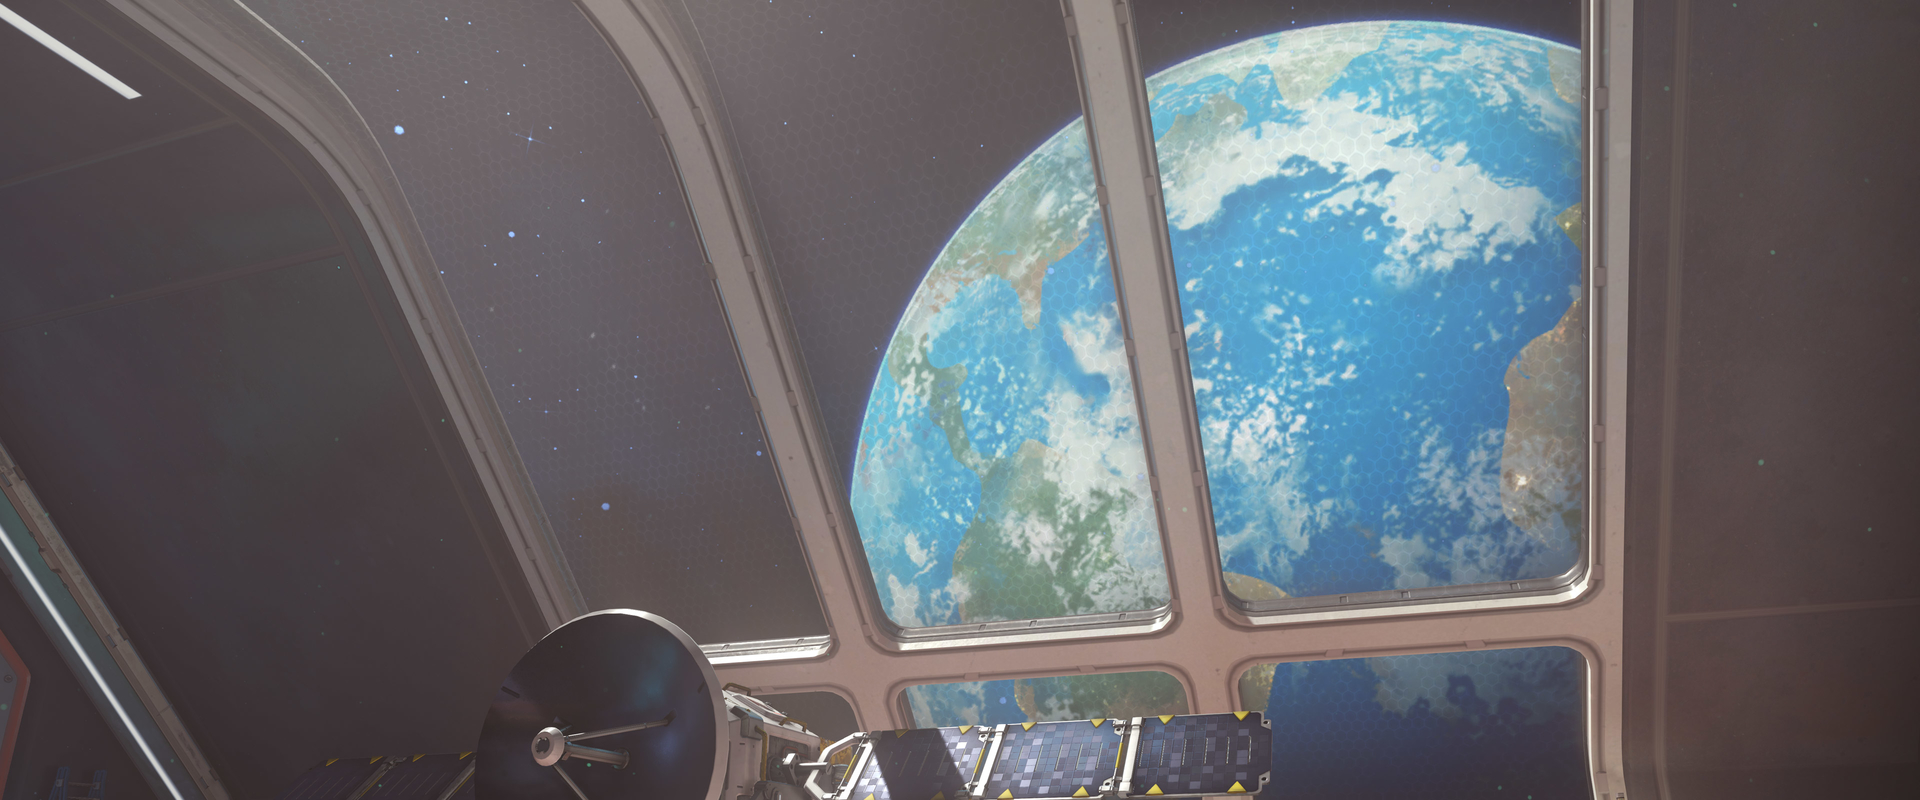 Irány a Hold! Alacsony gravitációval jön az új Overwatch map